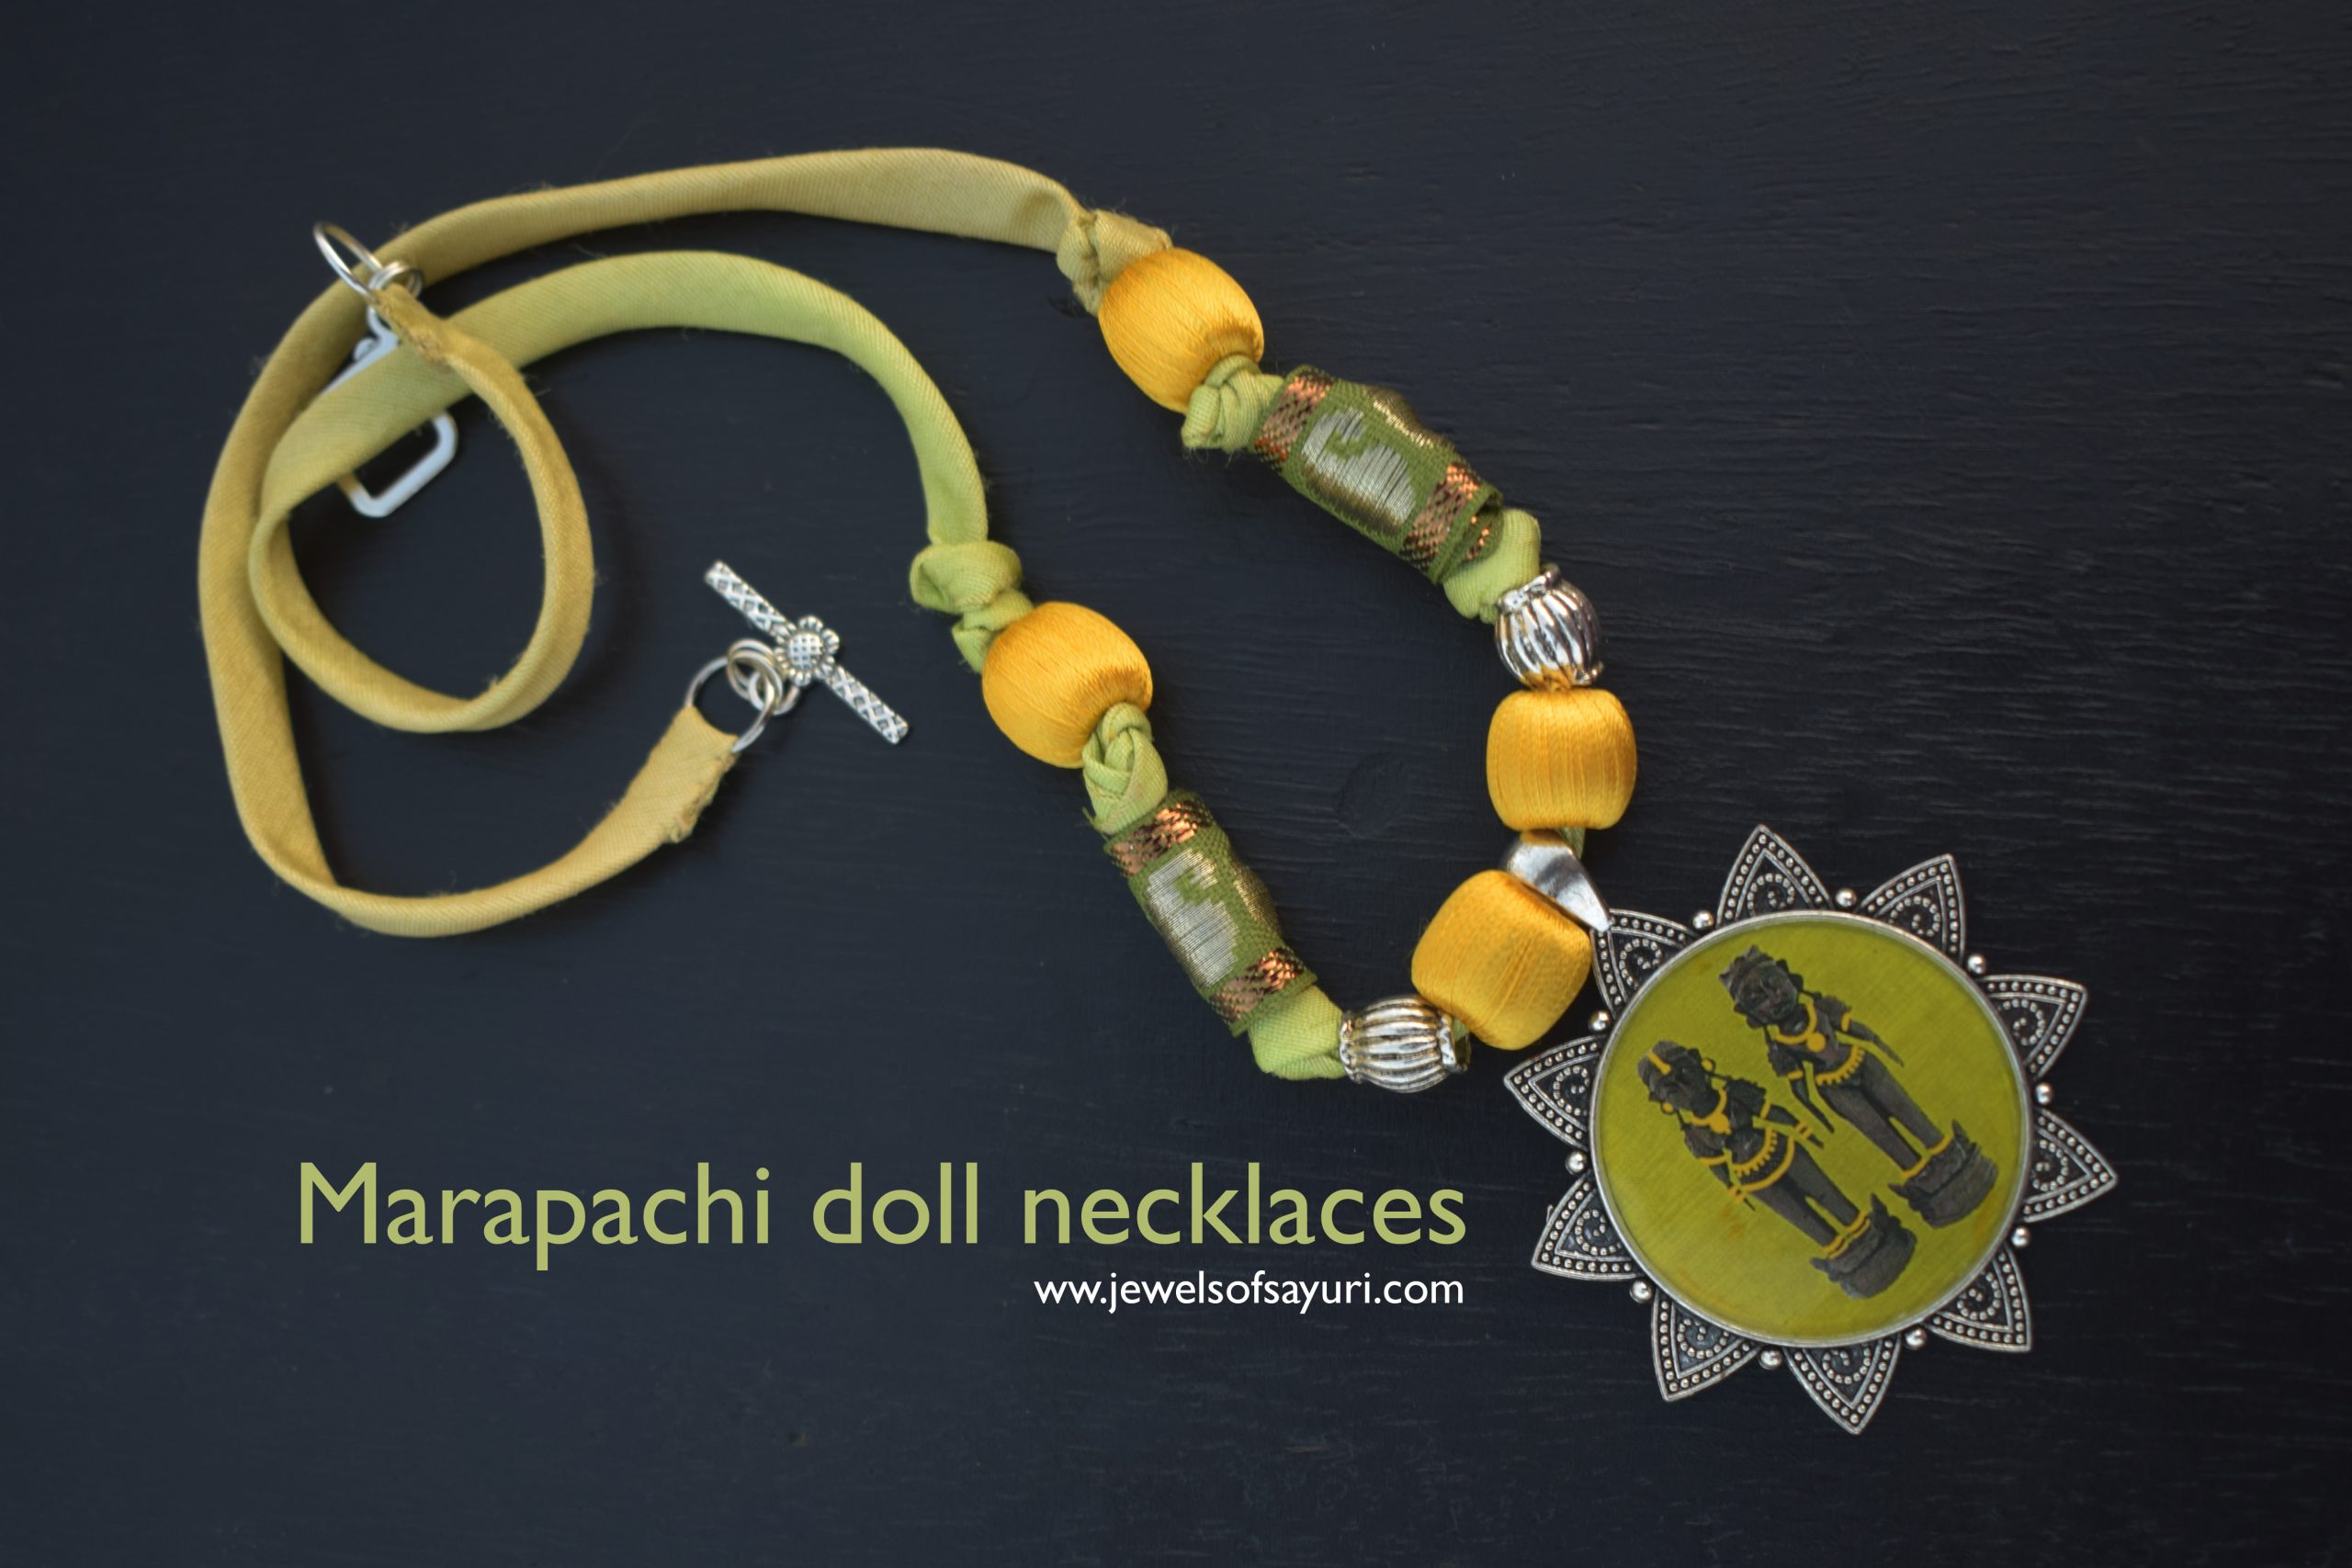 Marapachi doll necklaces